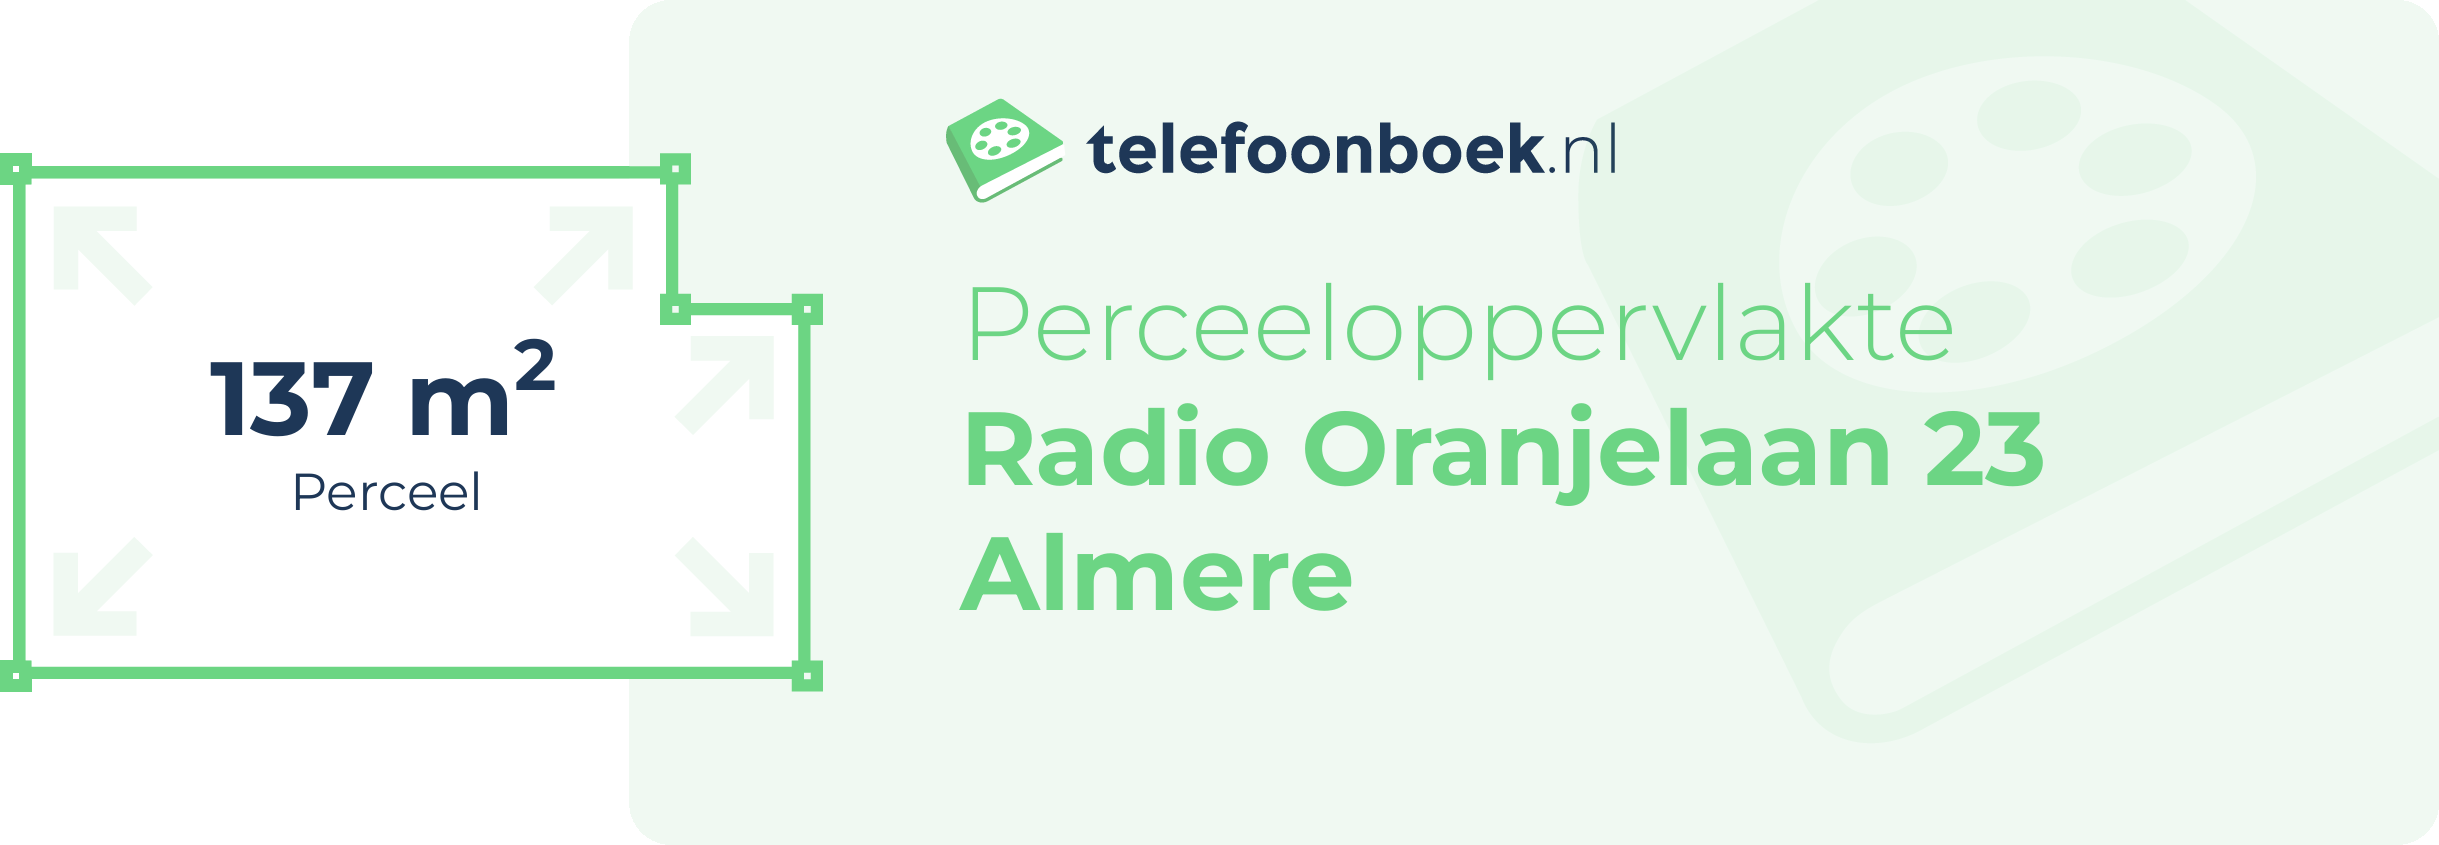 Perceeloppervlakte Radio Oranjelaan 23 Almere